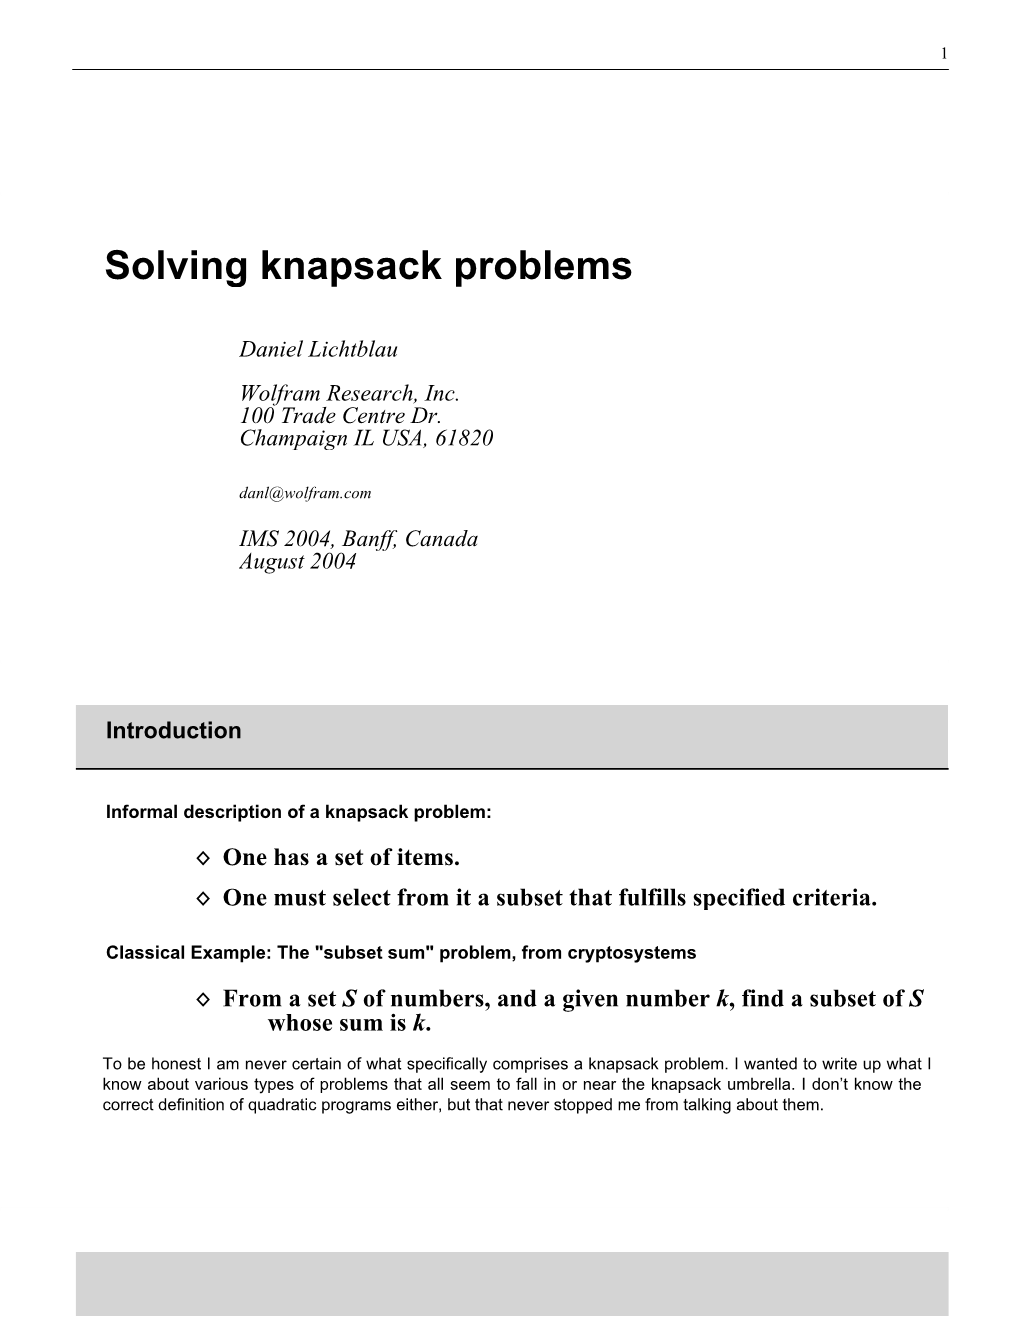 Solving Knapsack Problems